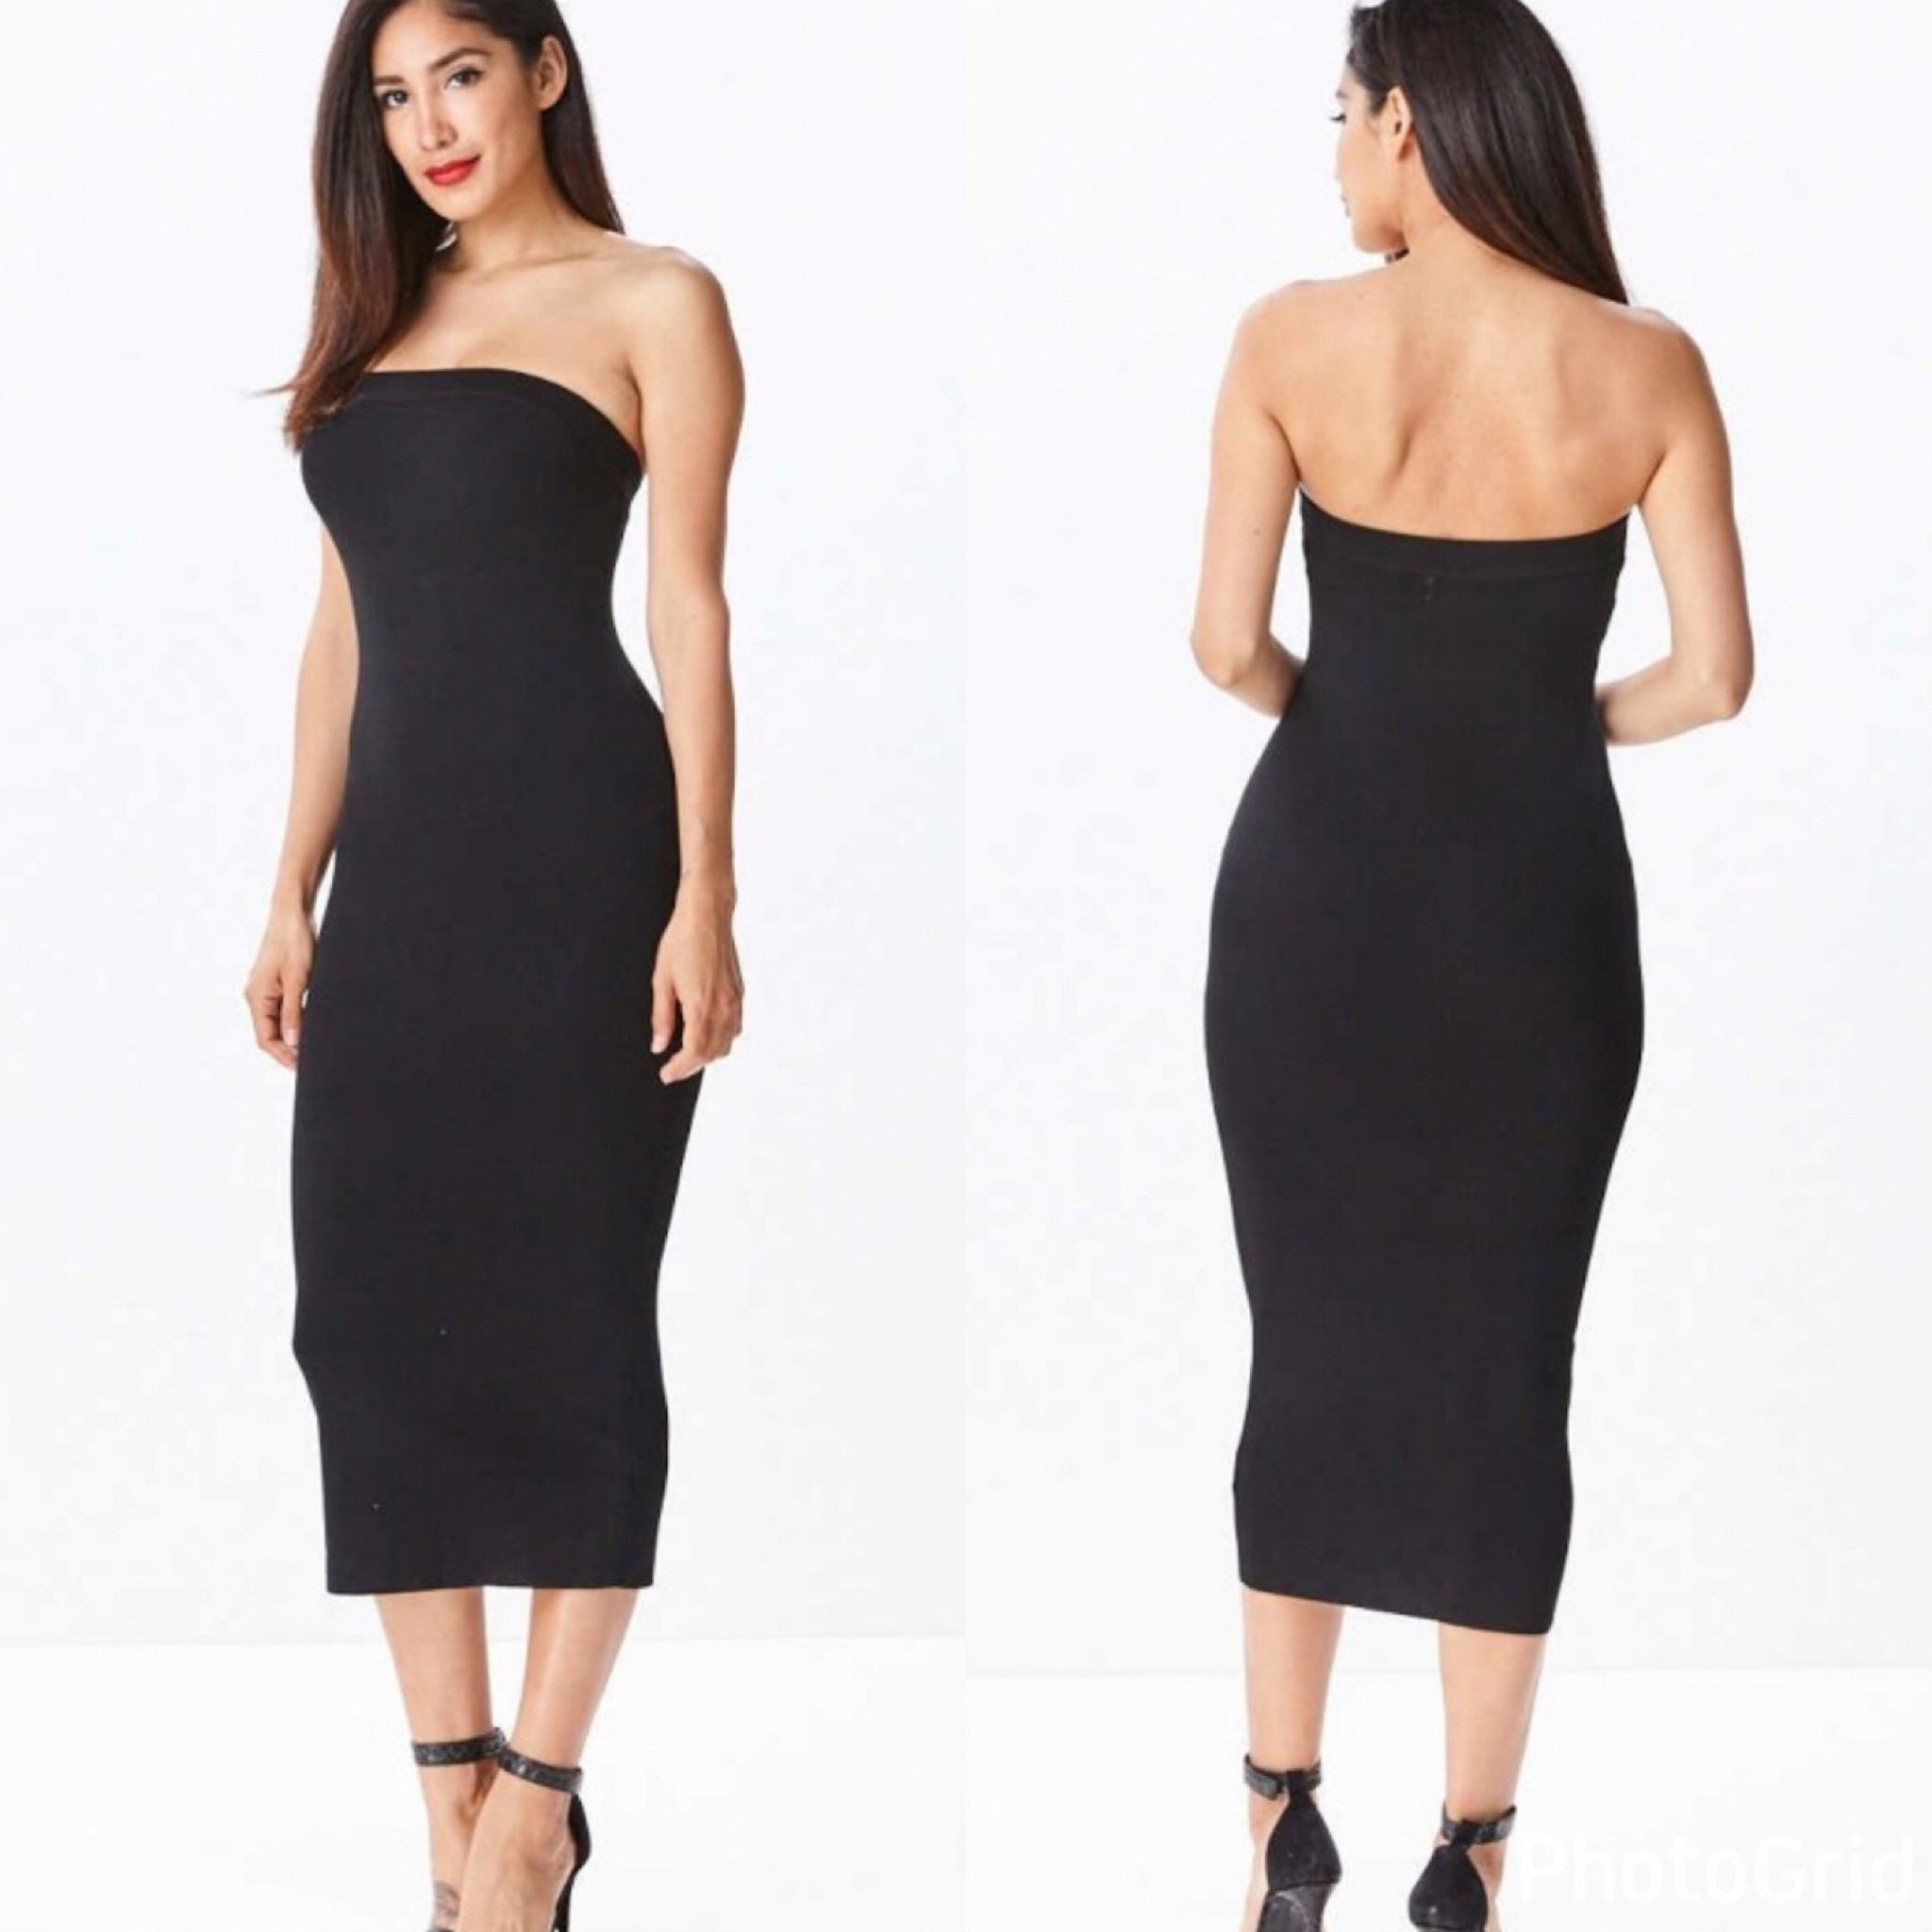 Black Plus Size Strapless Tube Top Dress - socialbutterflycollection-com (163165536270) (7927560962222)